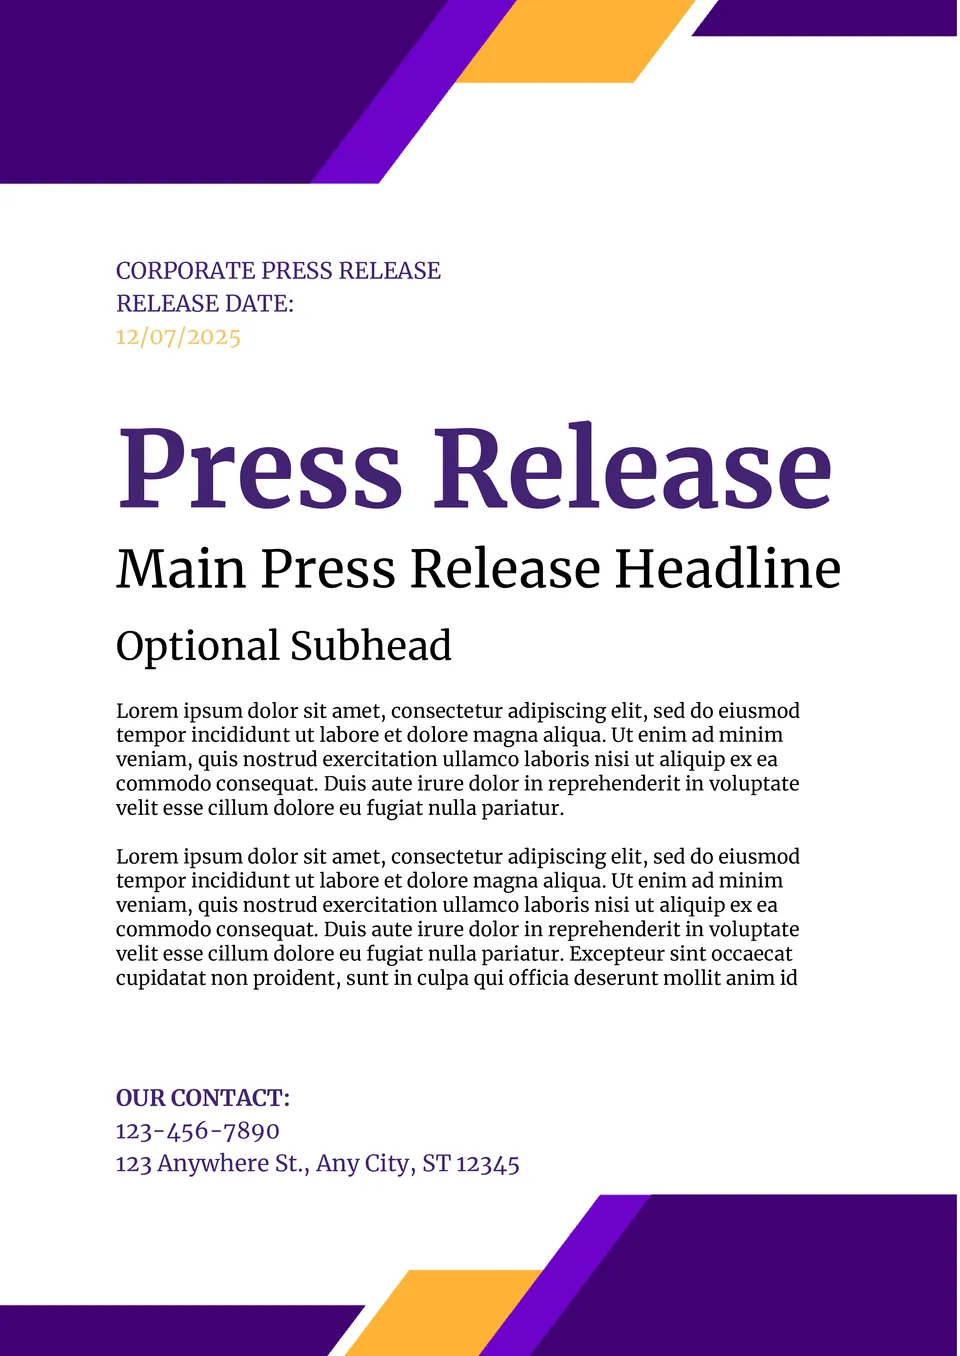 Corporate Press Release Template